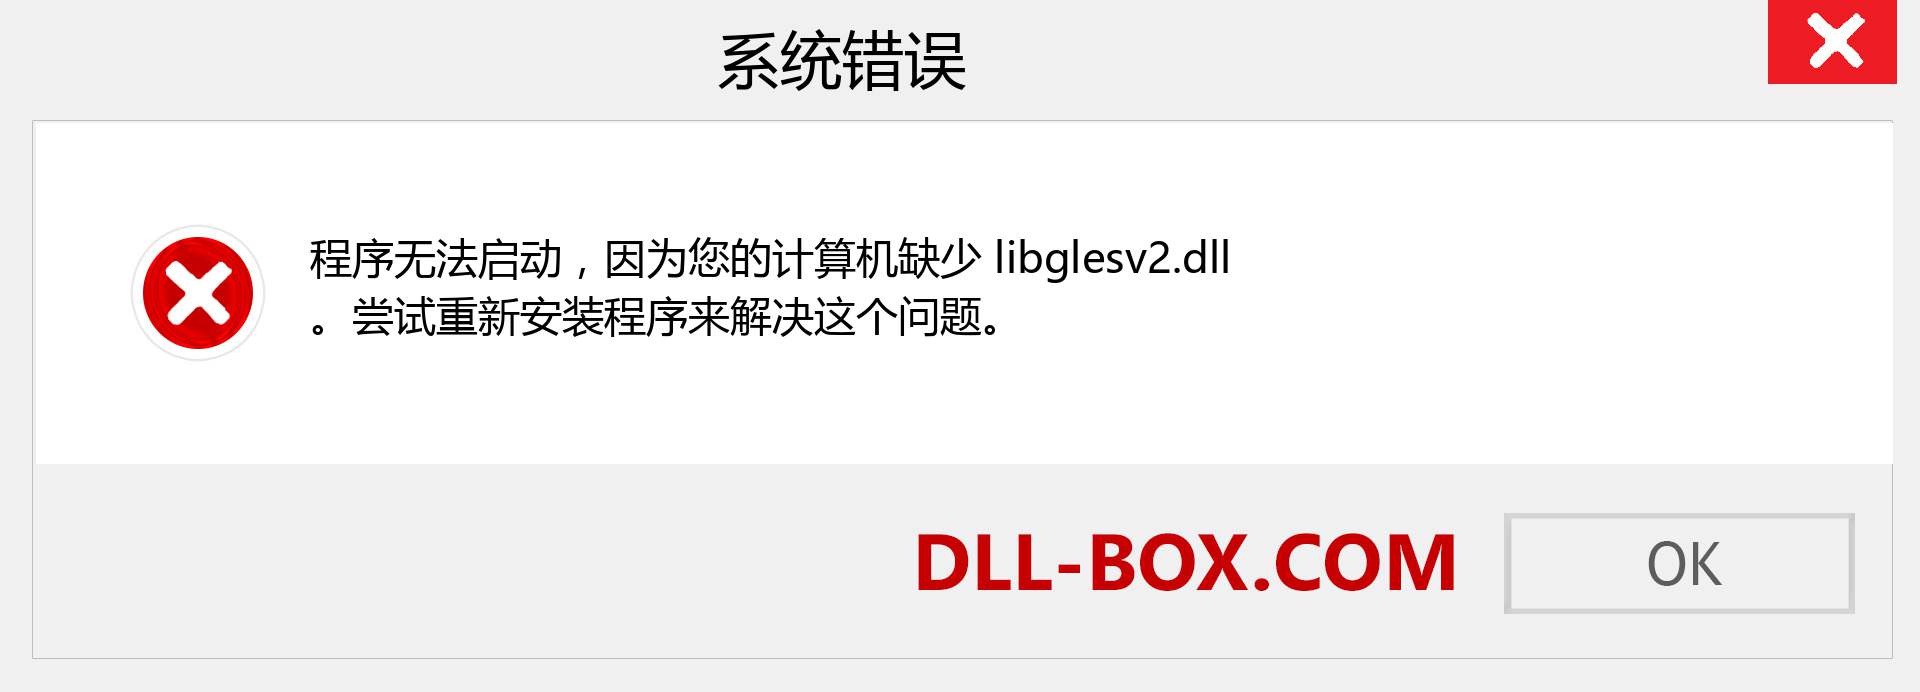 libglesv2.dll 文件丢失？。 适用于 Windows 7、8、10 的下载 - 修复 Windows、照片、图像上的 libglesv2 dll 丢失错误